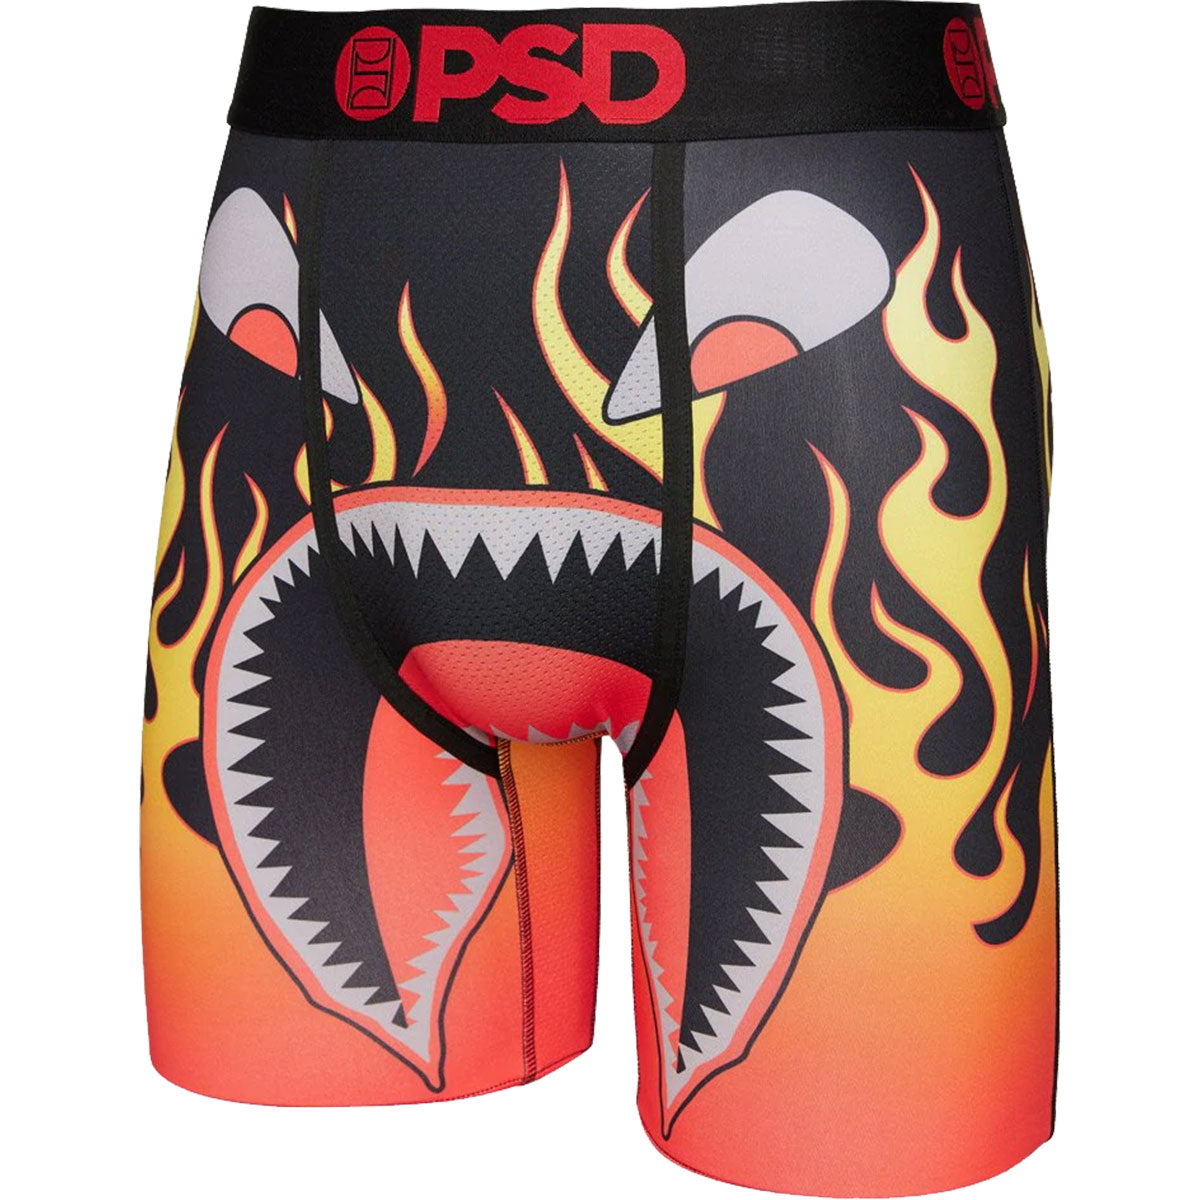 PSD Underwear Men's Boxer Briefs Space Jam Group Size: L Red/Black